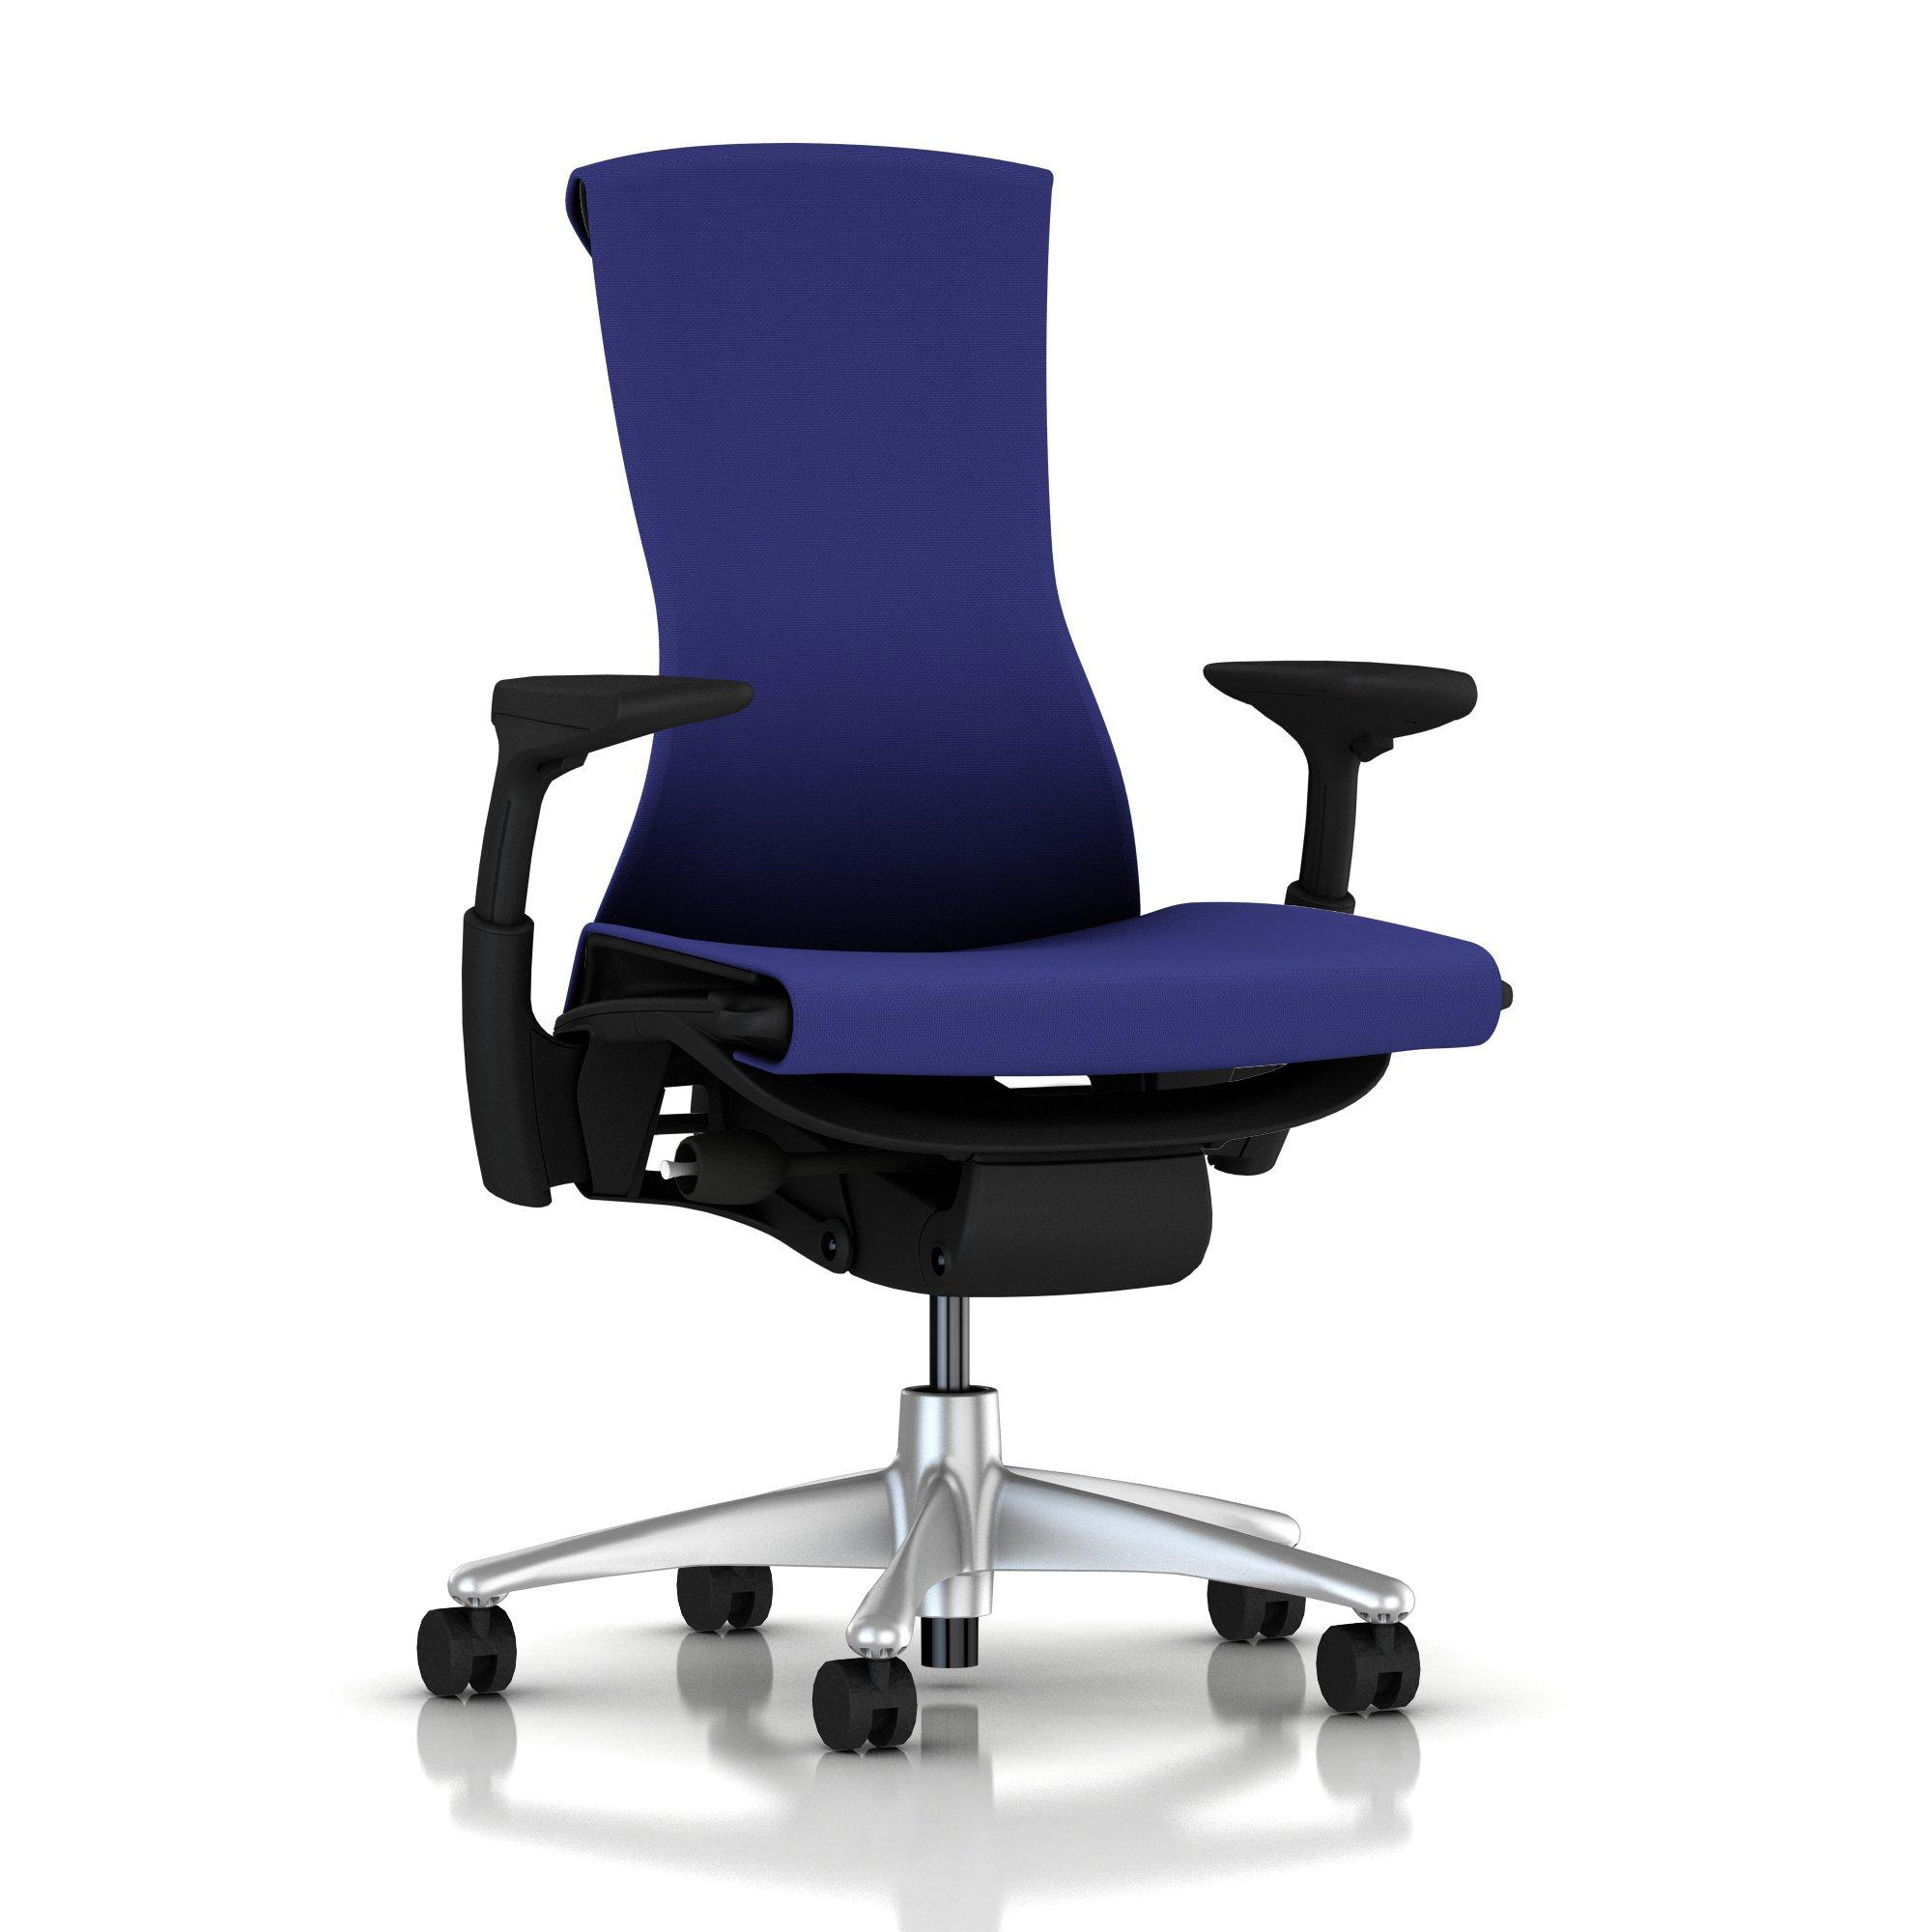 Embody Chair Iris Blue Rhythm with Graphite Frame Titanium Base by Herman Miller